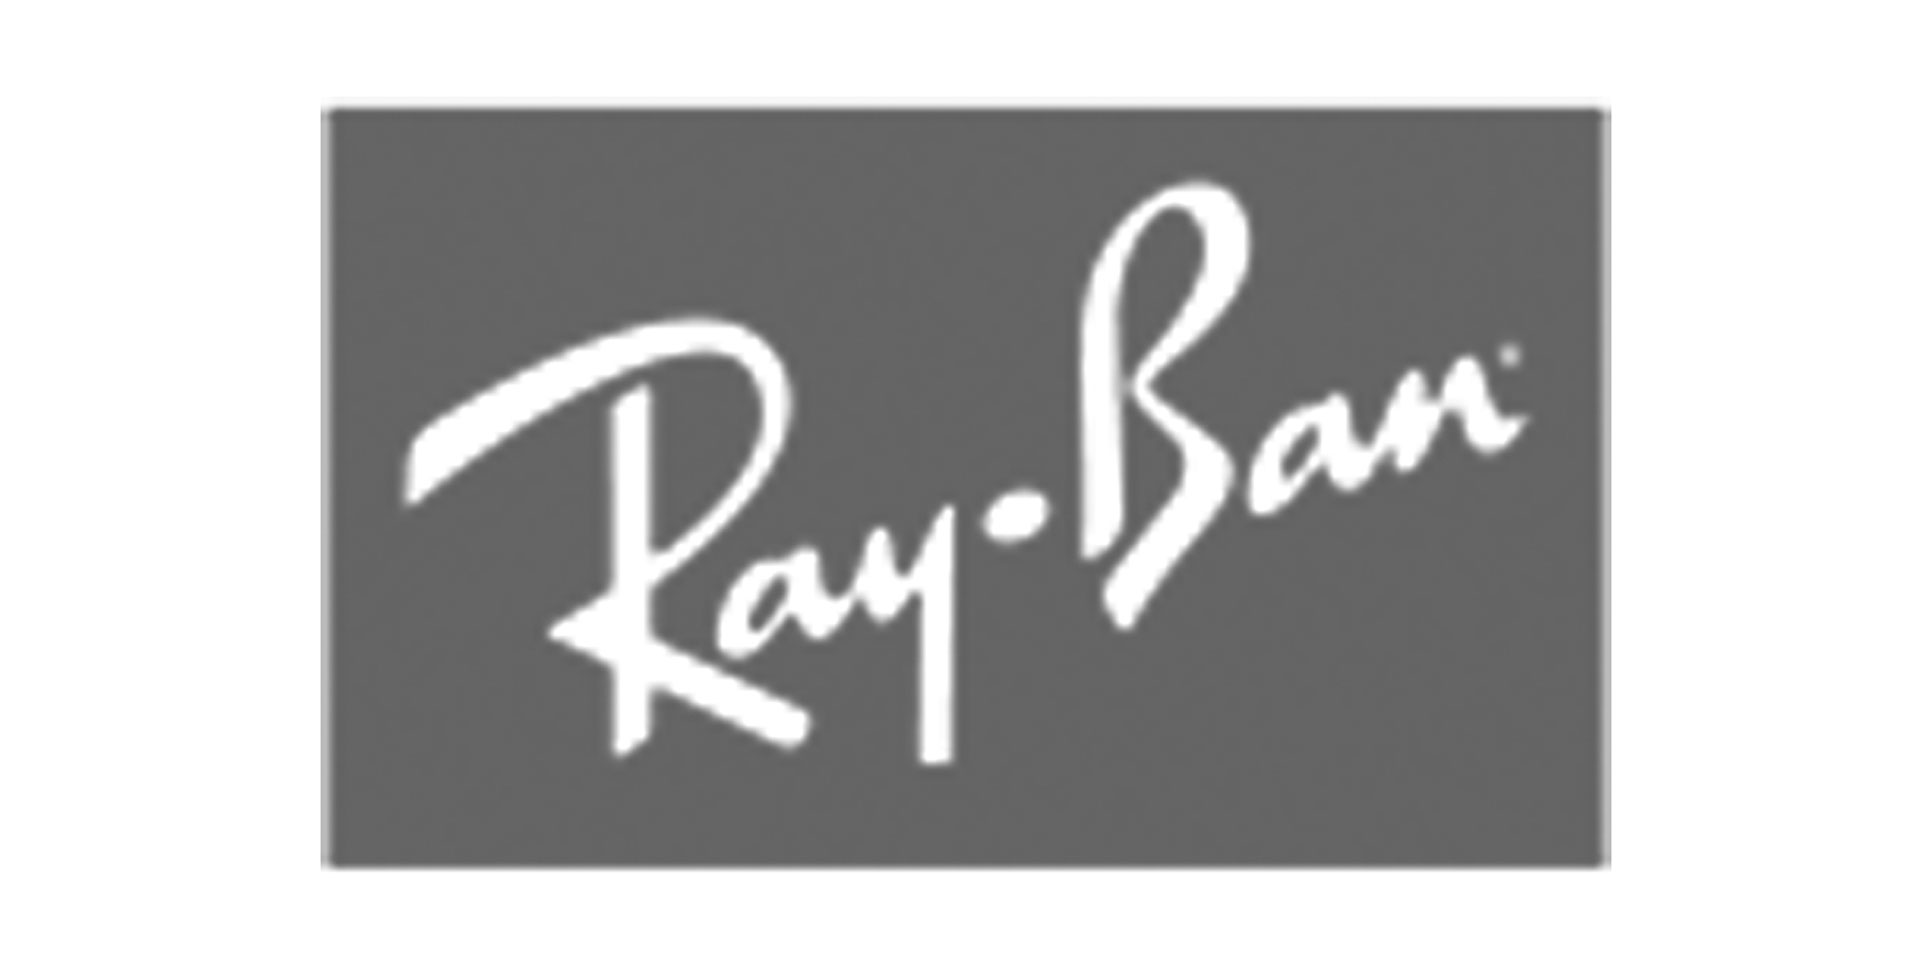 Ray-Ban RB4184 Black Polarized Sunglasses | Costco